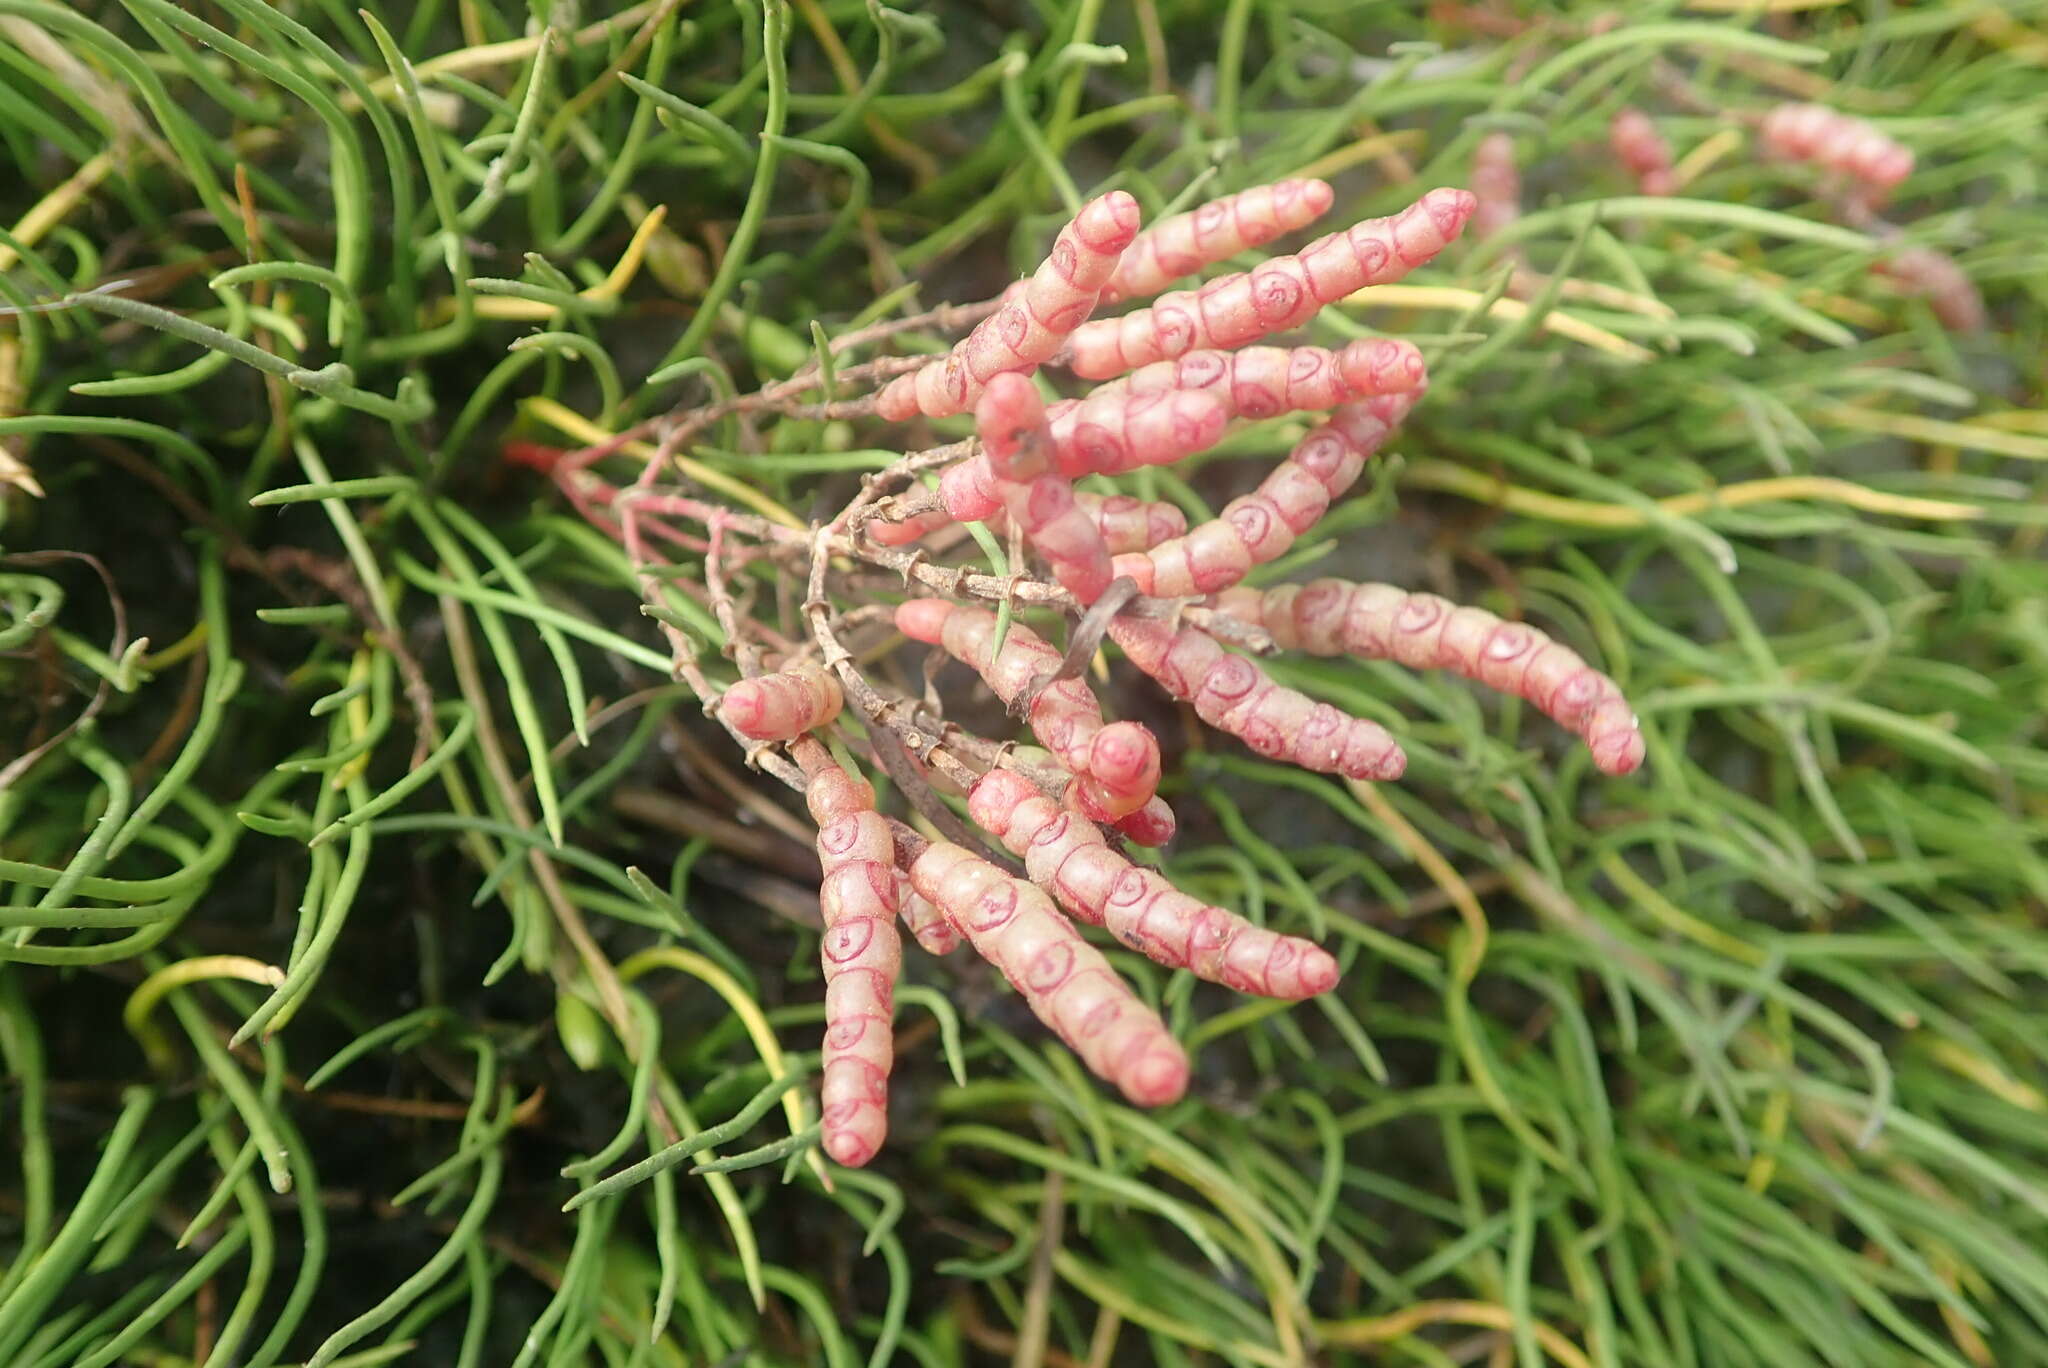 Image of Salicornia meyeriana Moss